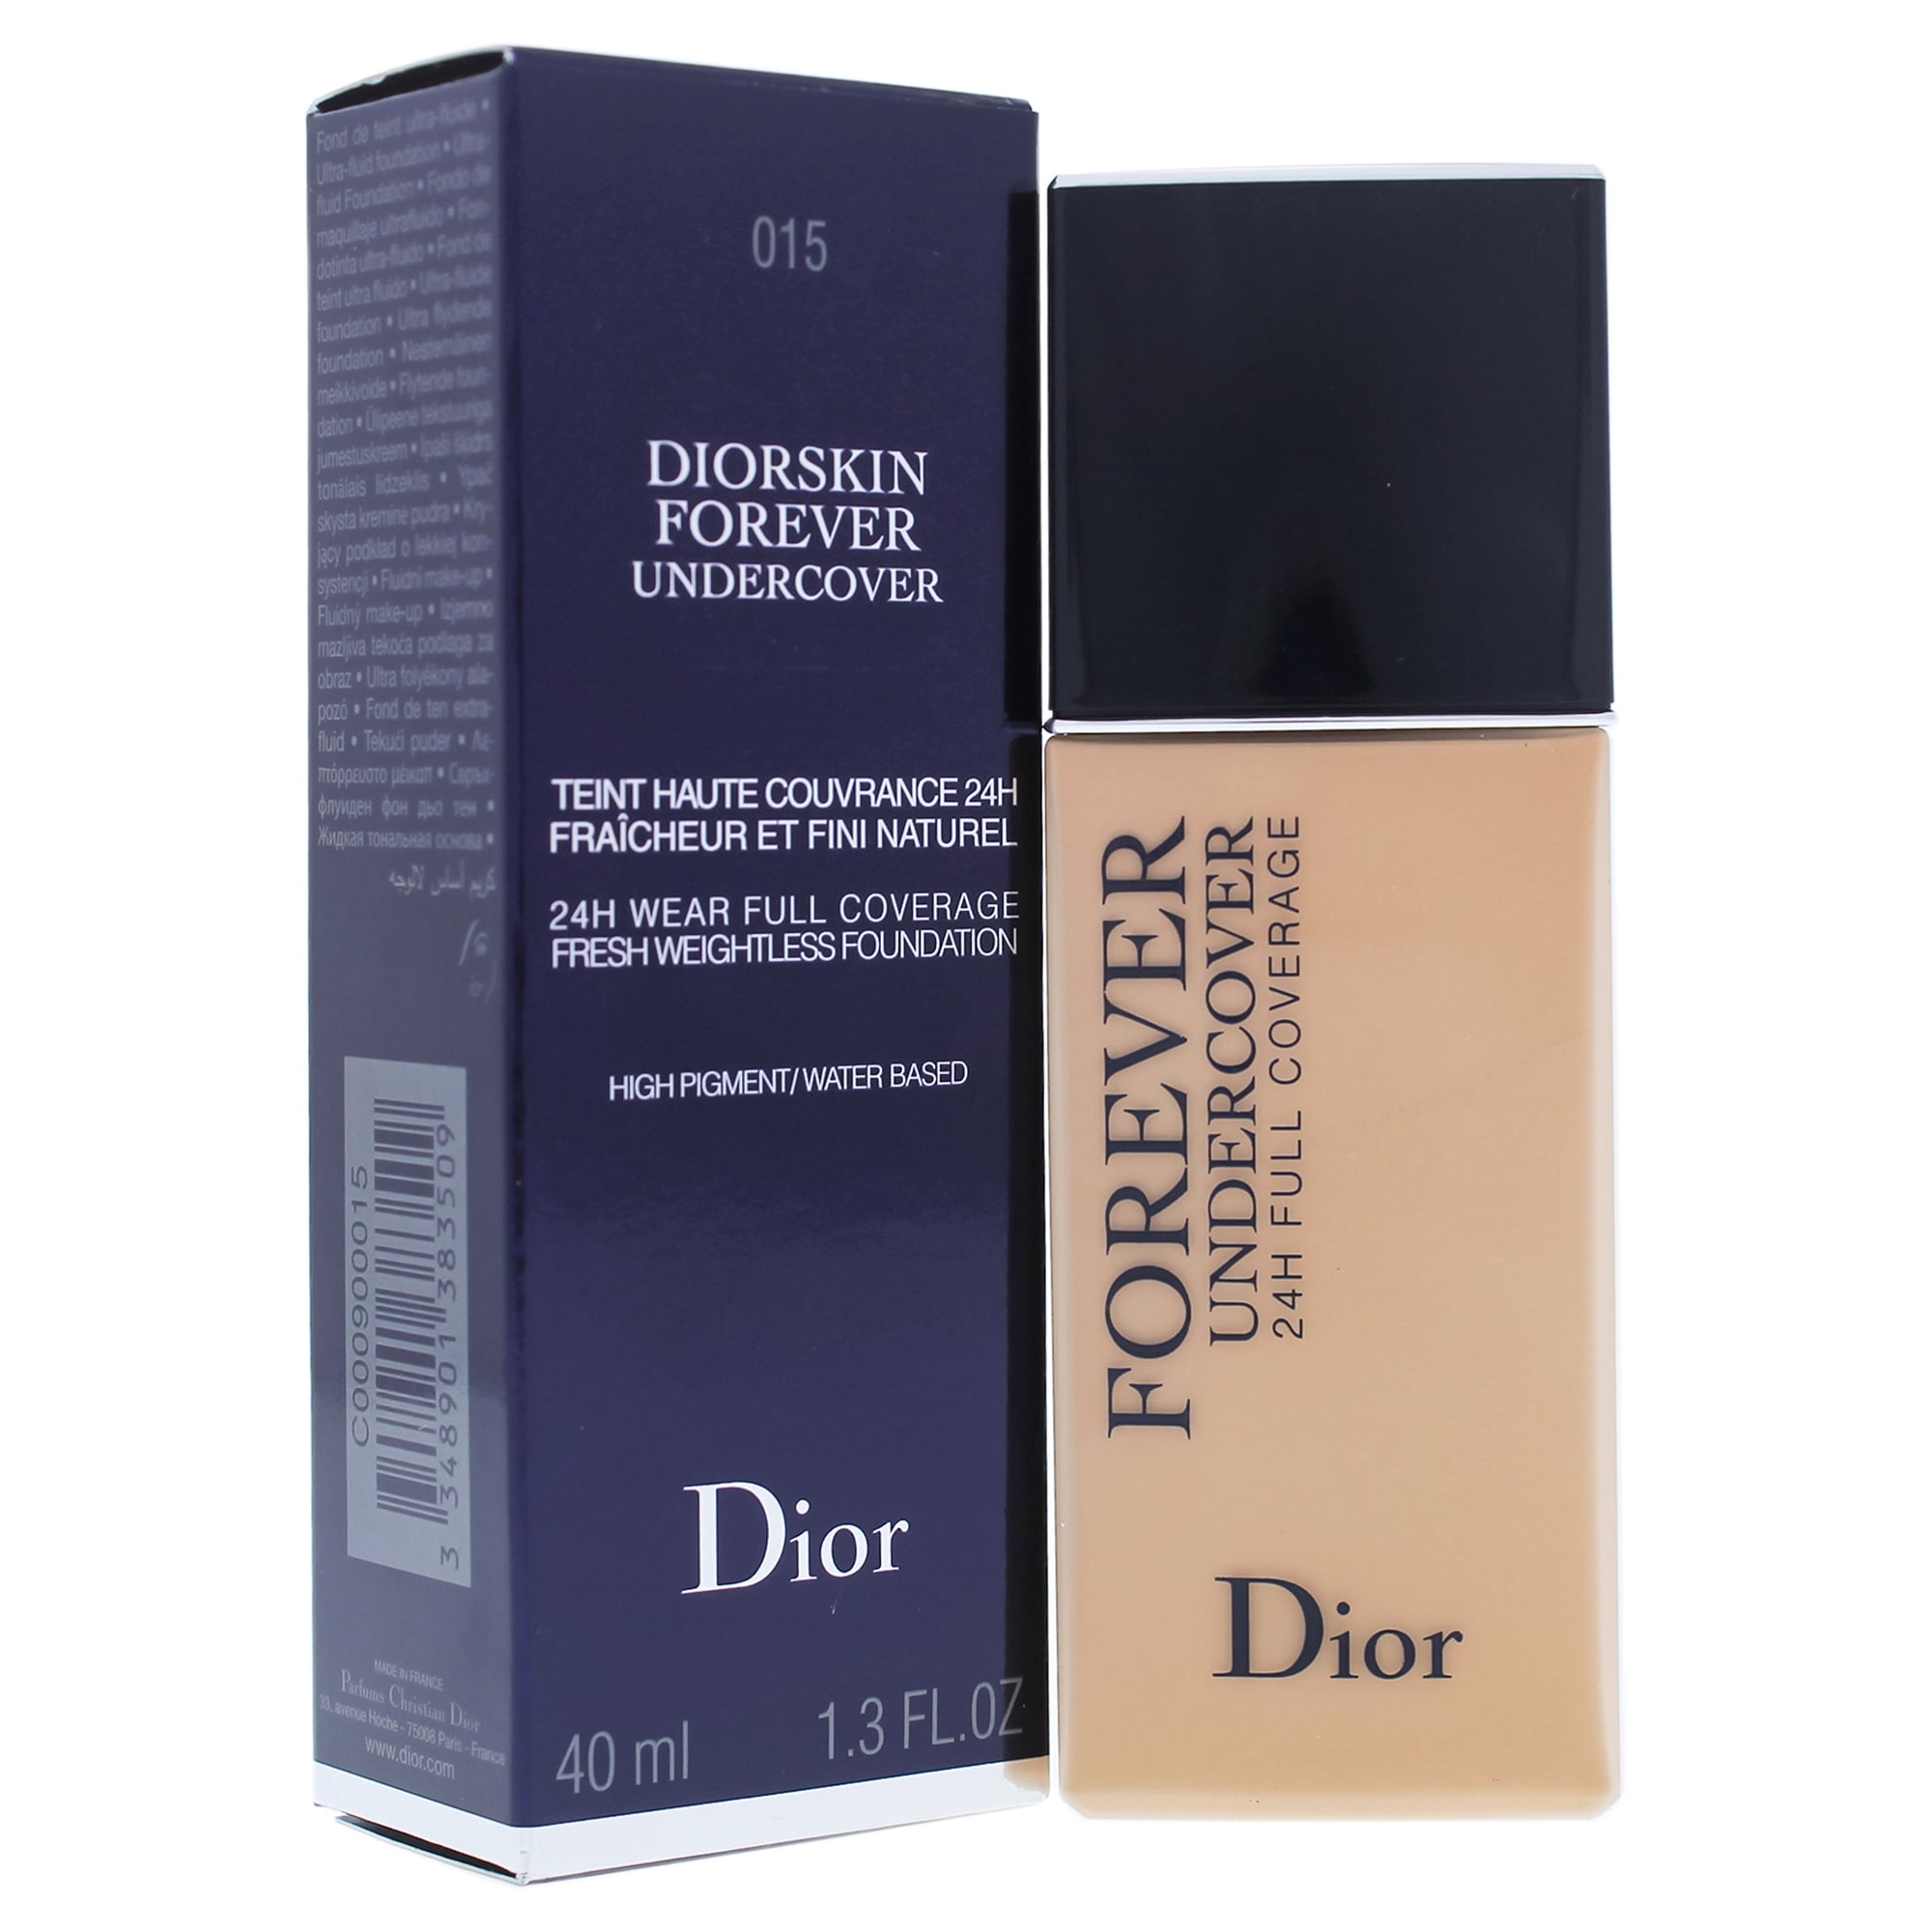 Dior Diorskin Forever Undercover Foundation 015 Tender Beige By Christian Dior For Women 1 3 Oz Found Walmart Com Walmart Com